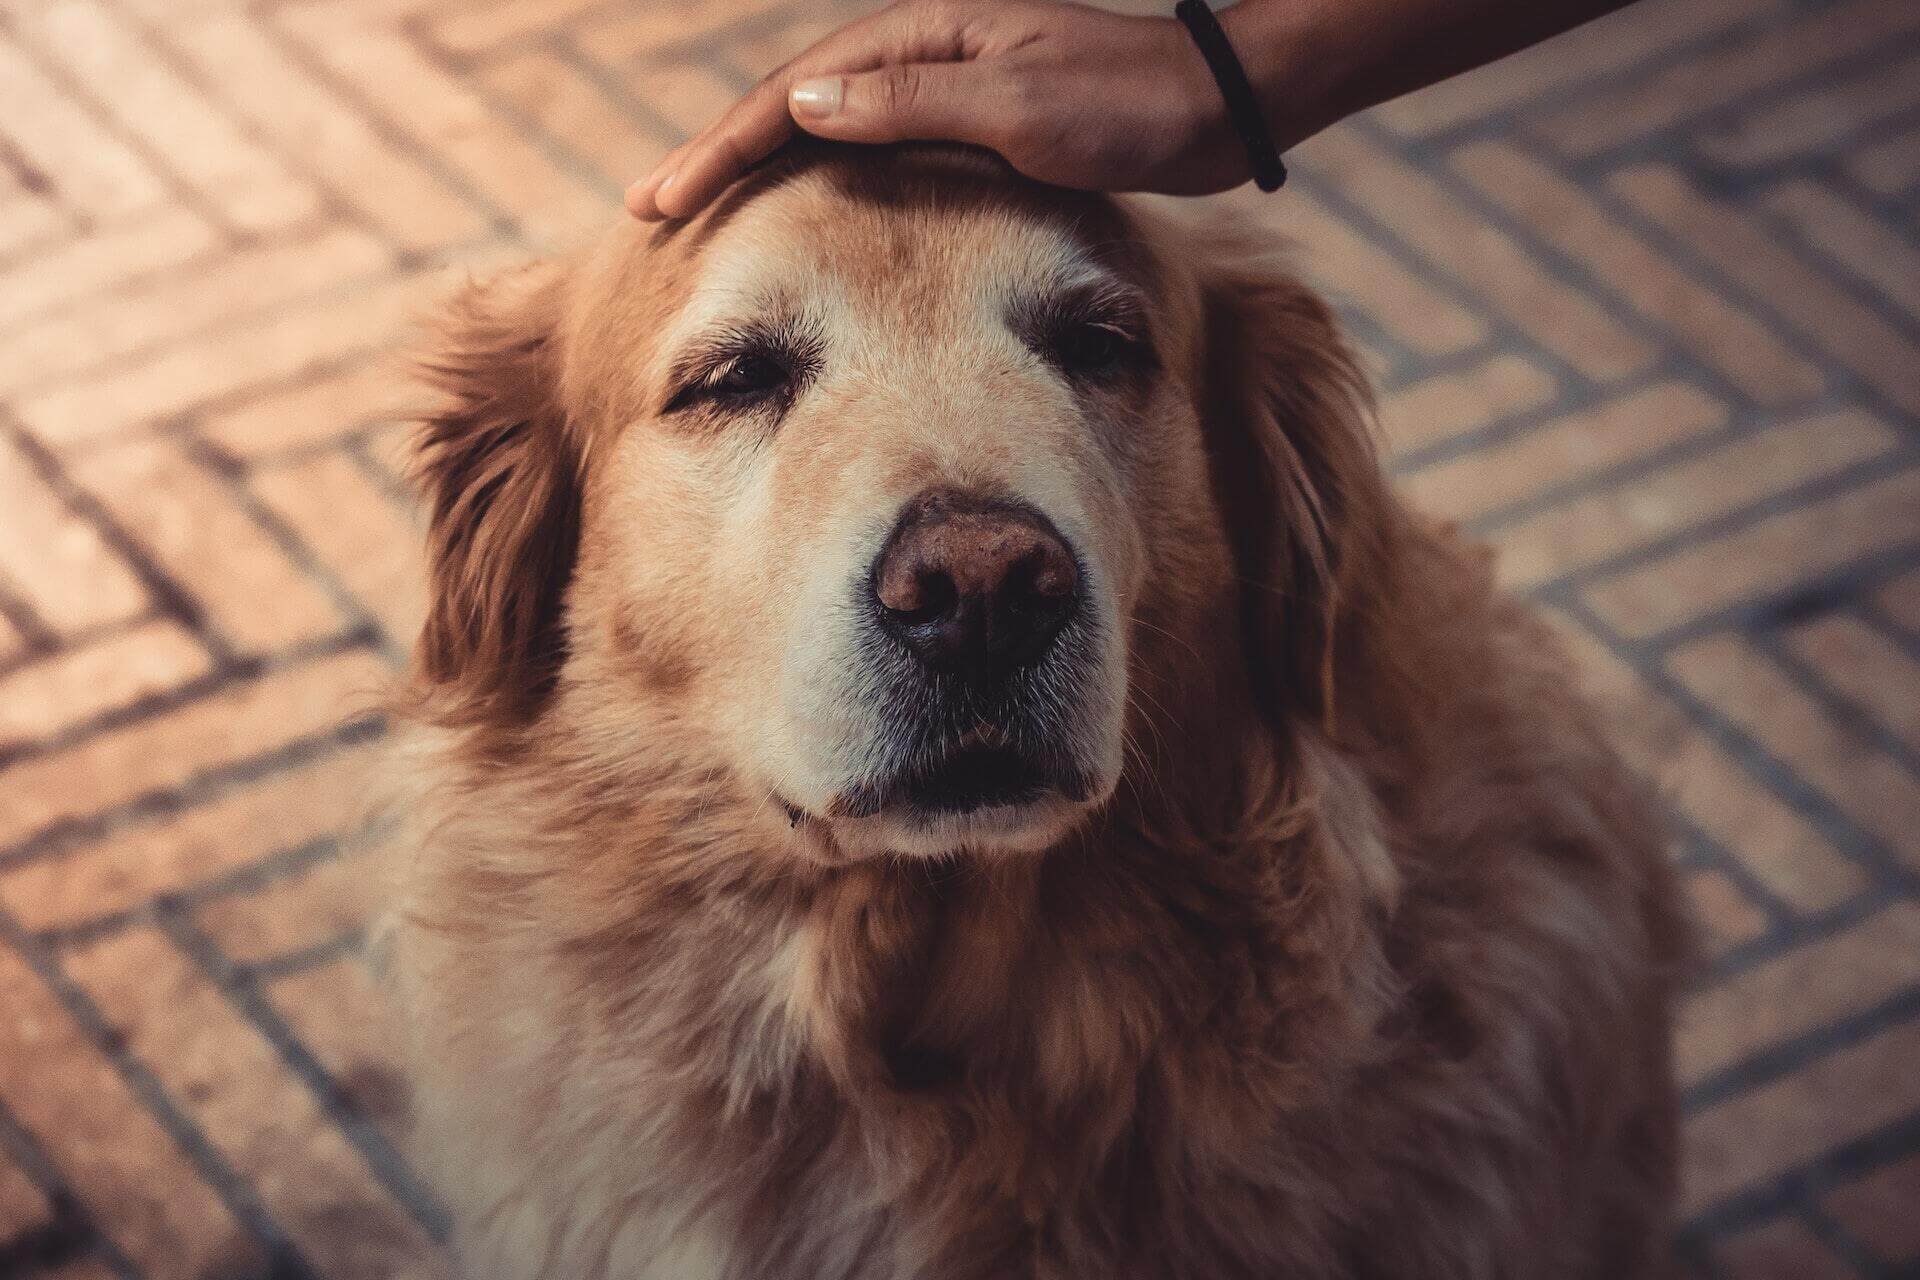 A person petting a senior dog